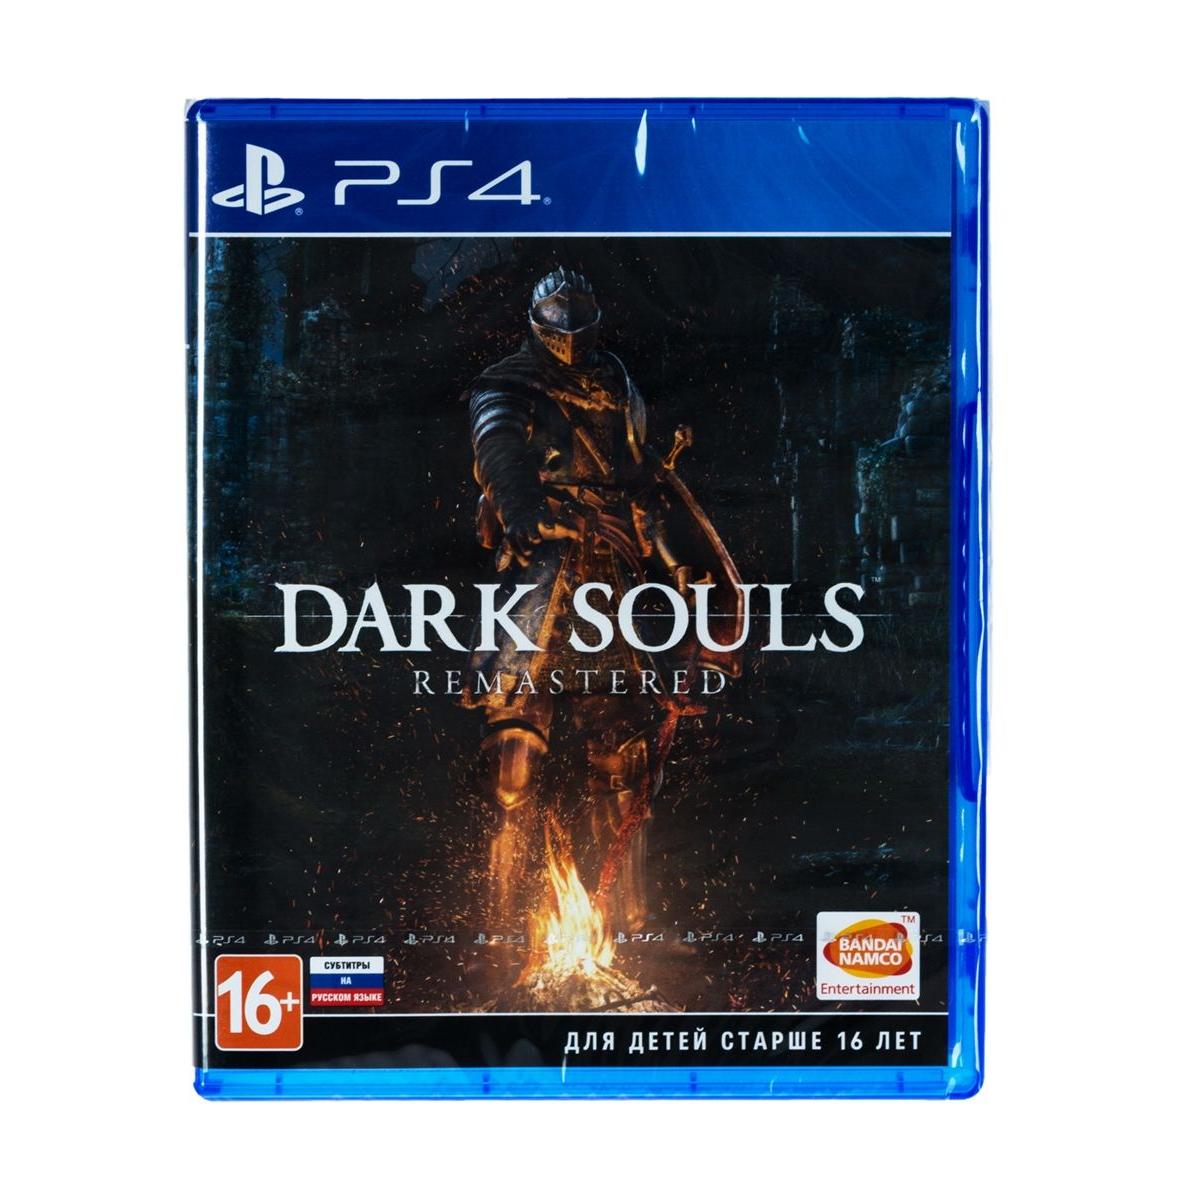 Dark игра отзывы. Dark Souls Remastered отзывы.